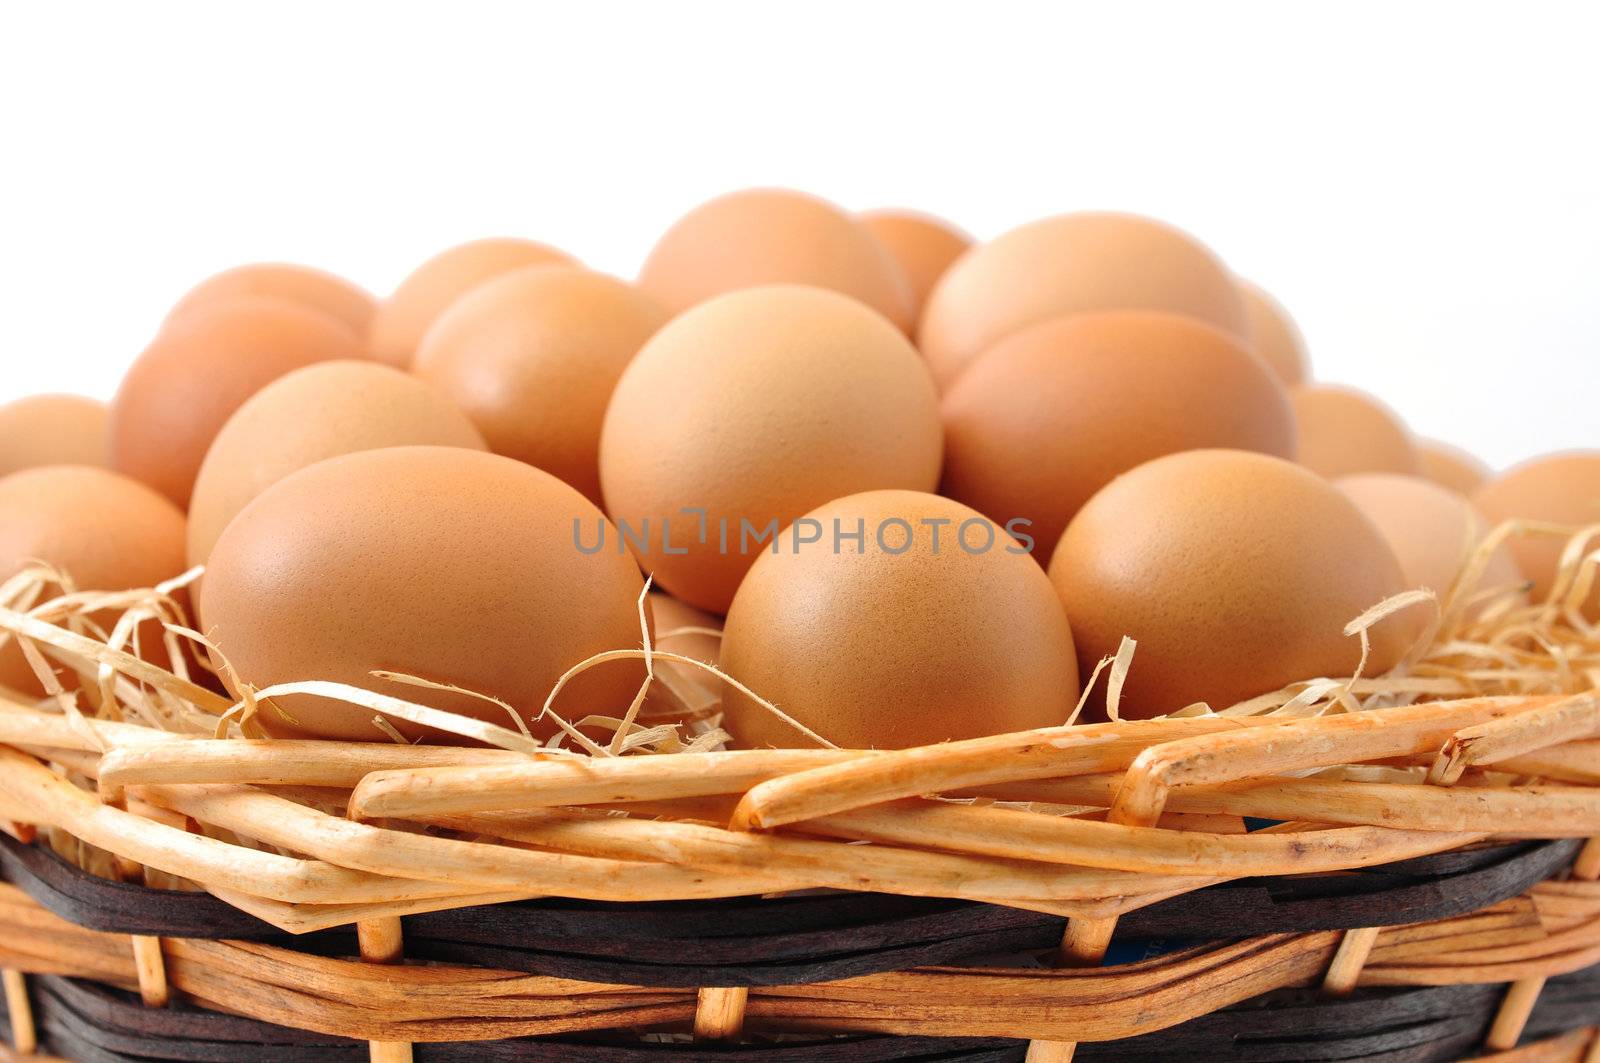 Eggs by antpkr